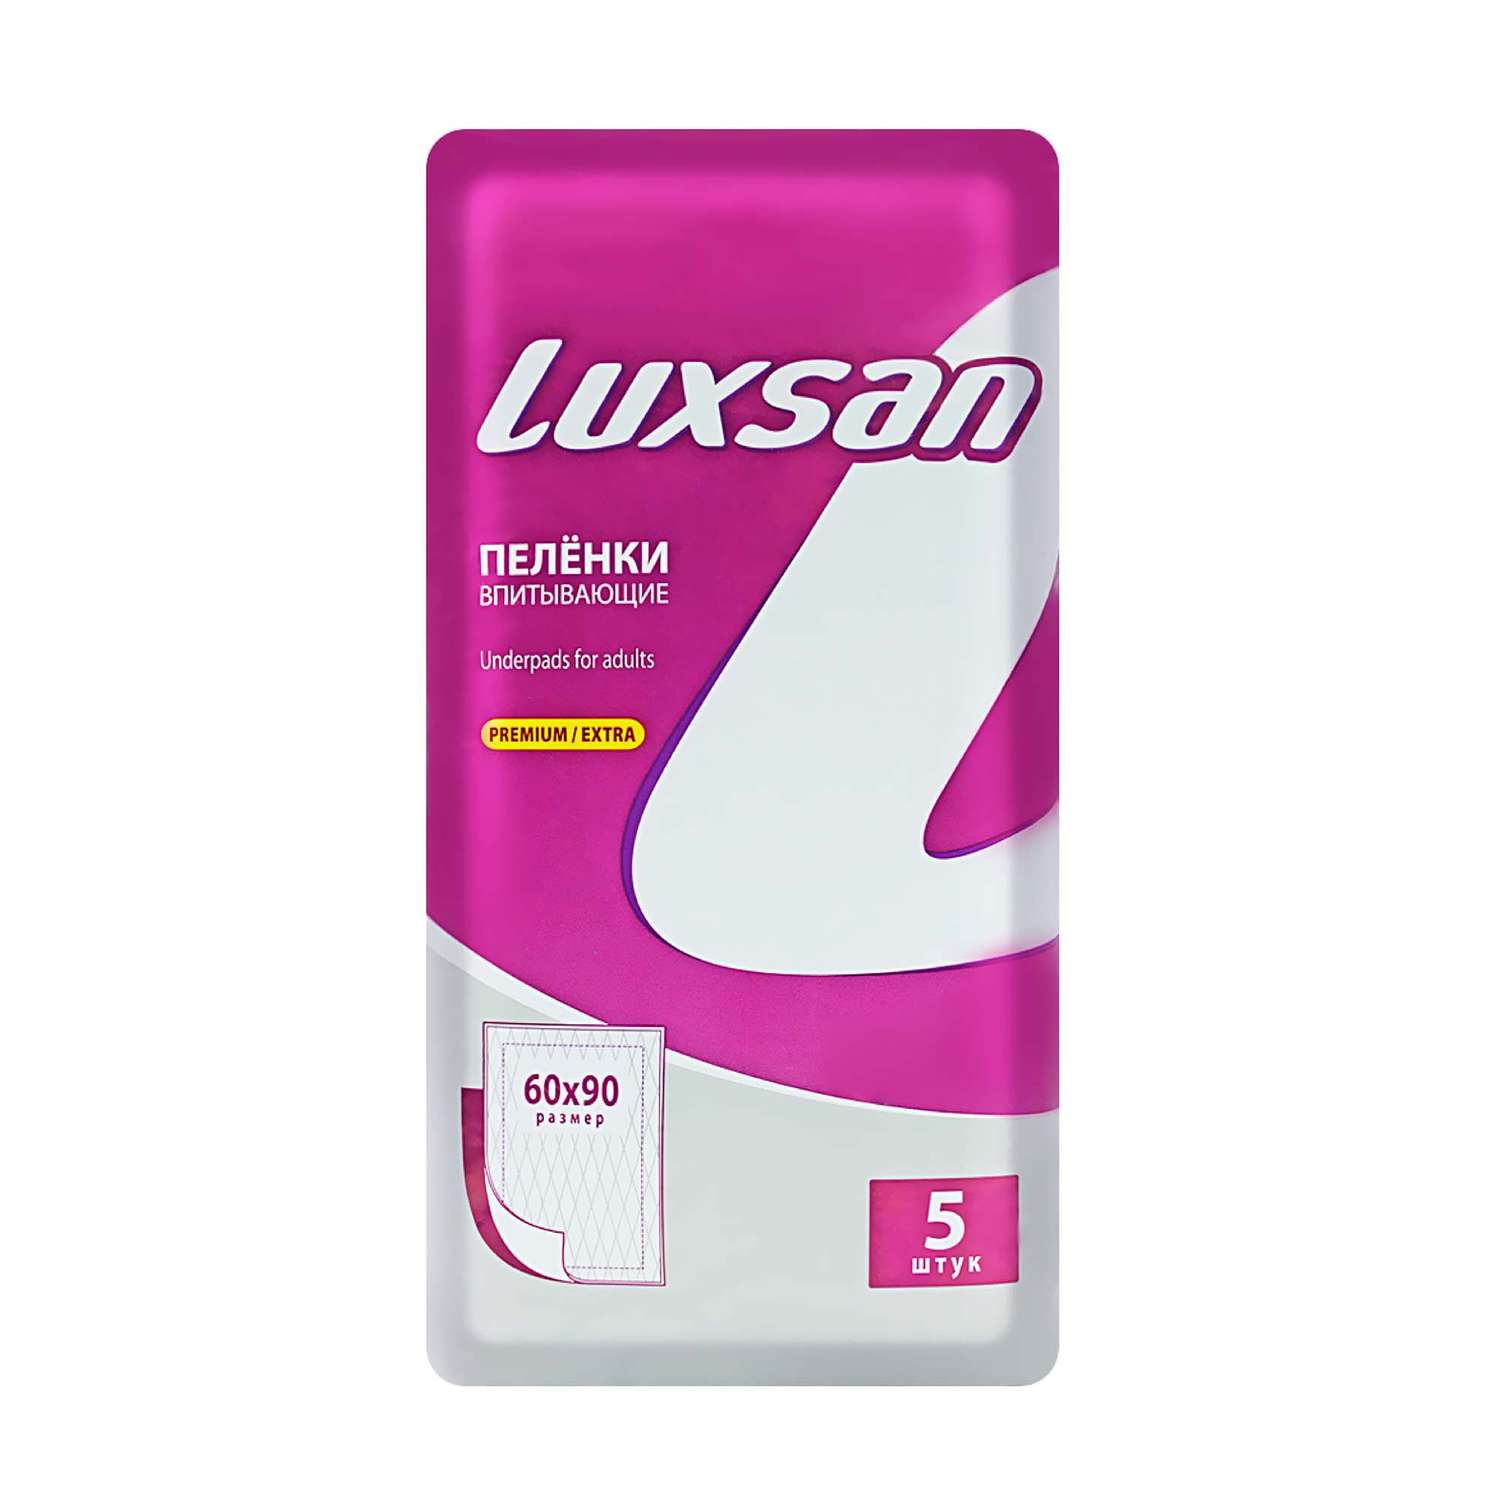 Пеленки впитывающие Luxsan Premium/Extra 60х90 5 шт - фото 1